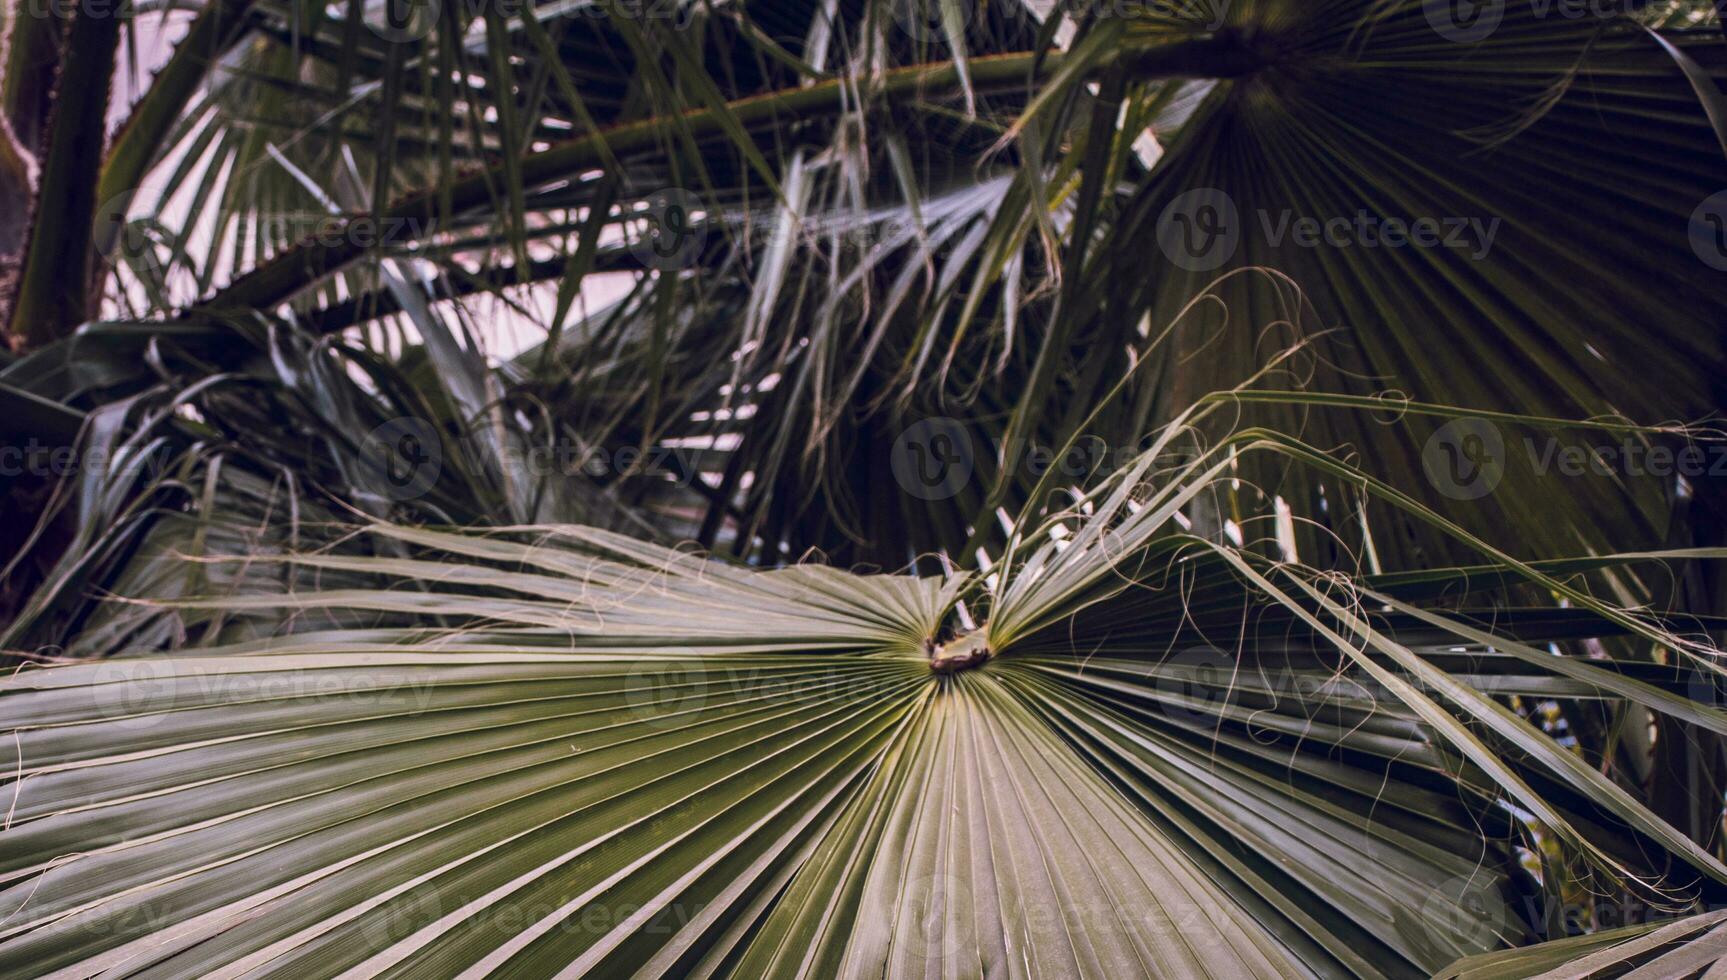 tropical Palma folhas, floral fundo conceito foto. 1 circular Palma folha dentro barcelona. foto